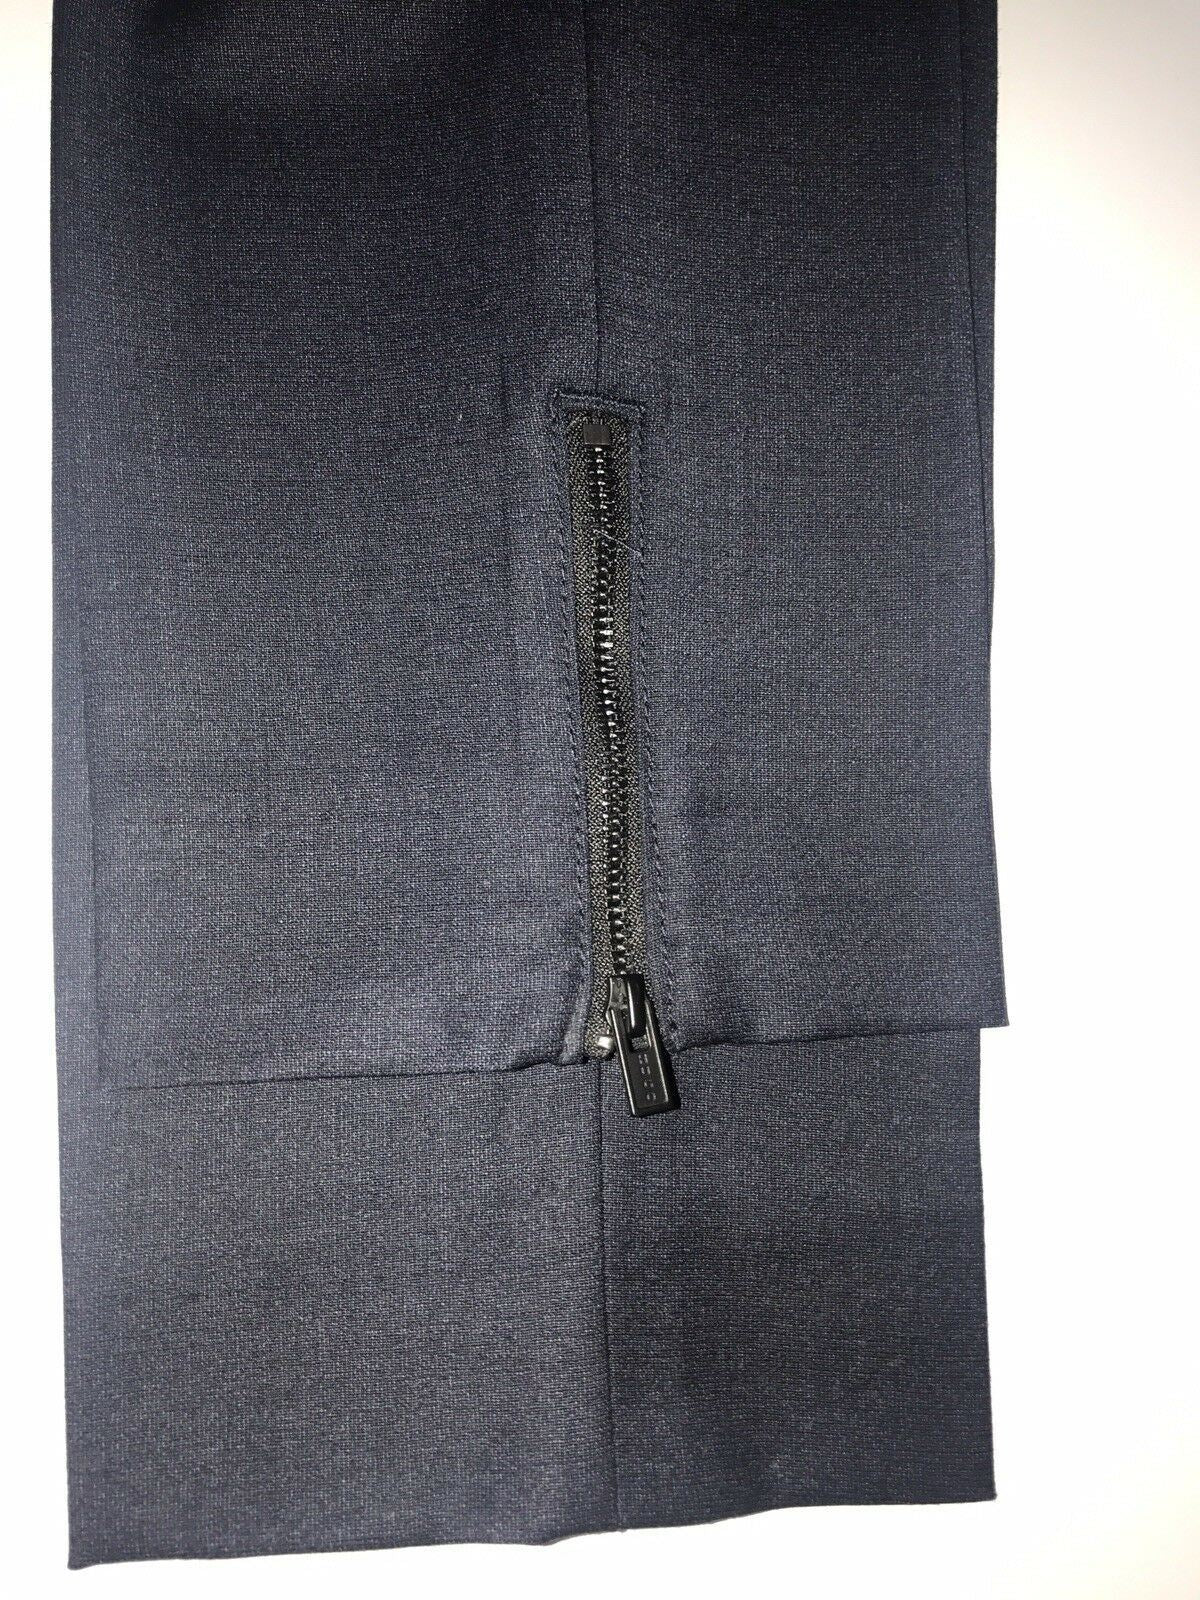 NWT $175 Boss Hugo Boss Hiw Mens Wool  Dark Blue Dress Pants Size 30R US